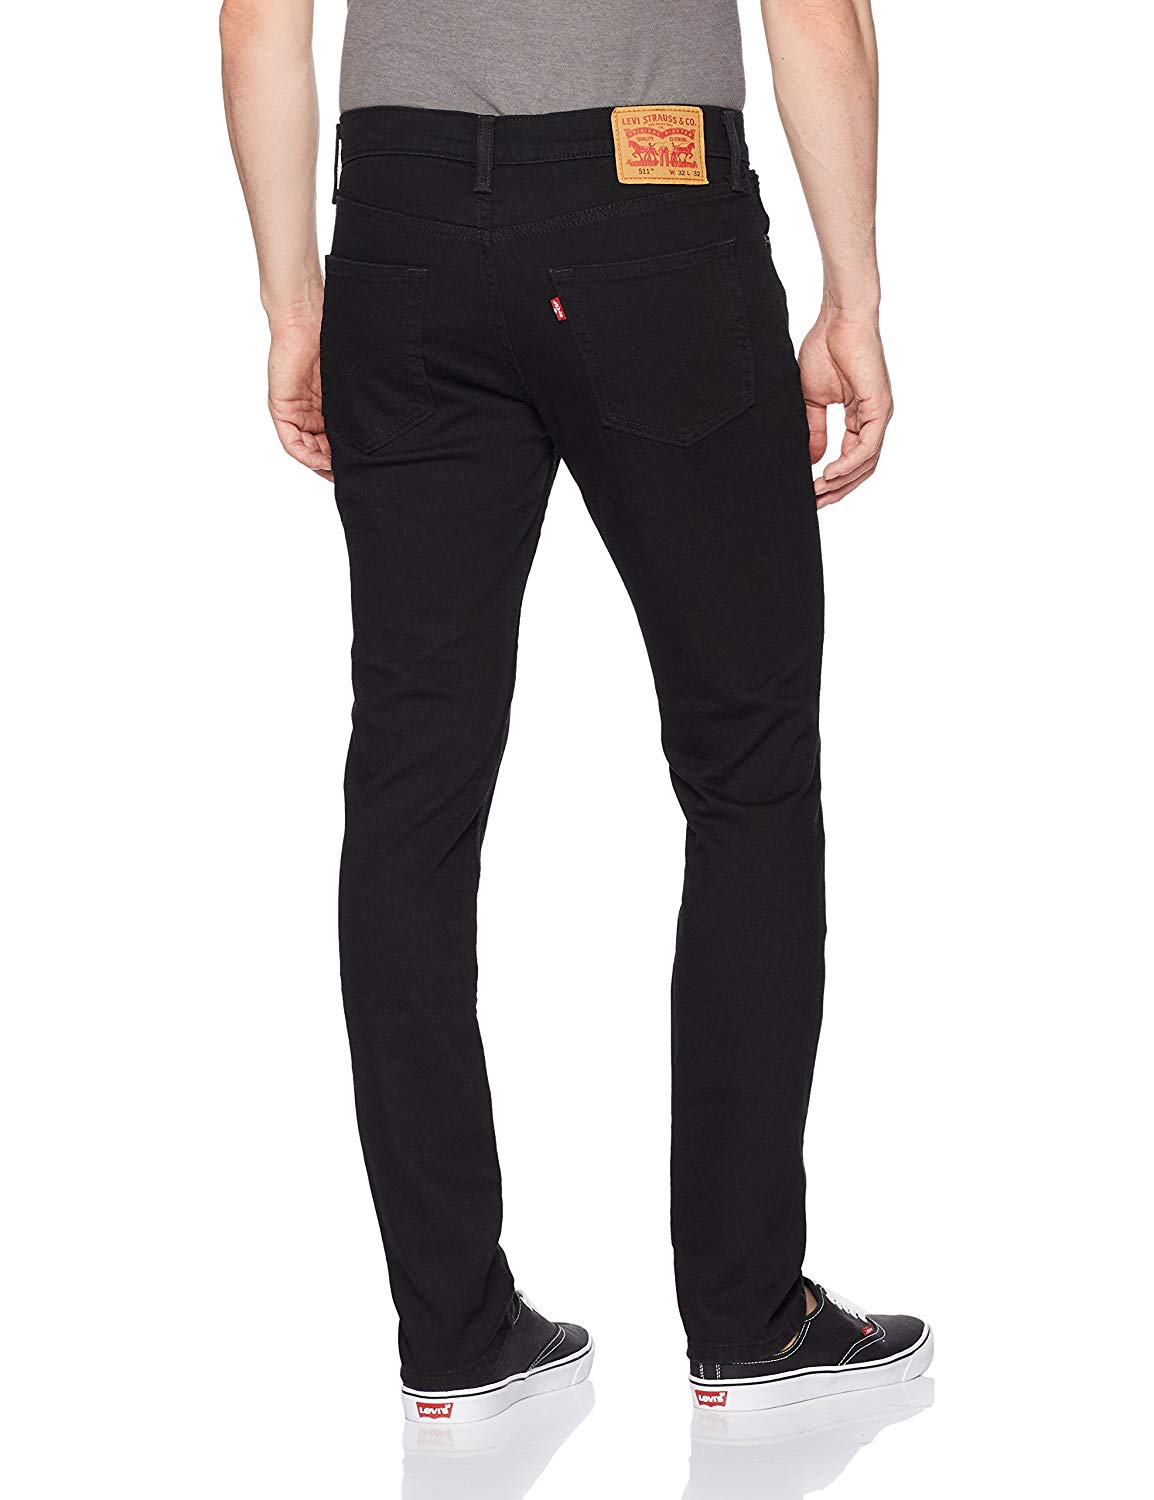 Levi's Men's 511 Slim Fit Jeans Stretch, Black 3D, 36W x, Black, Size